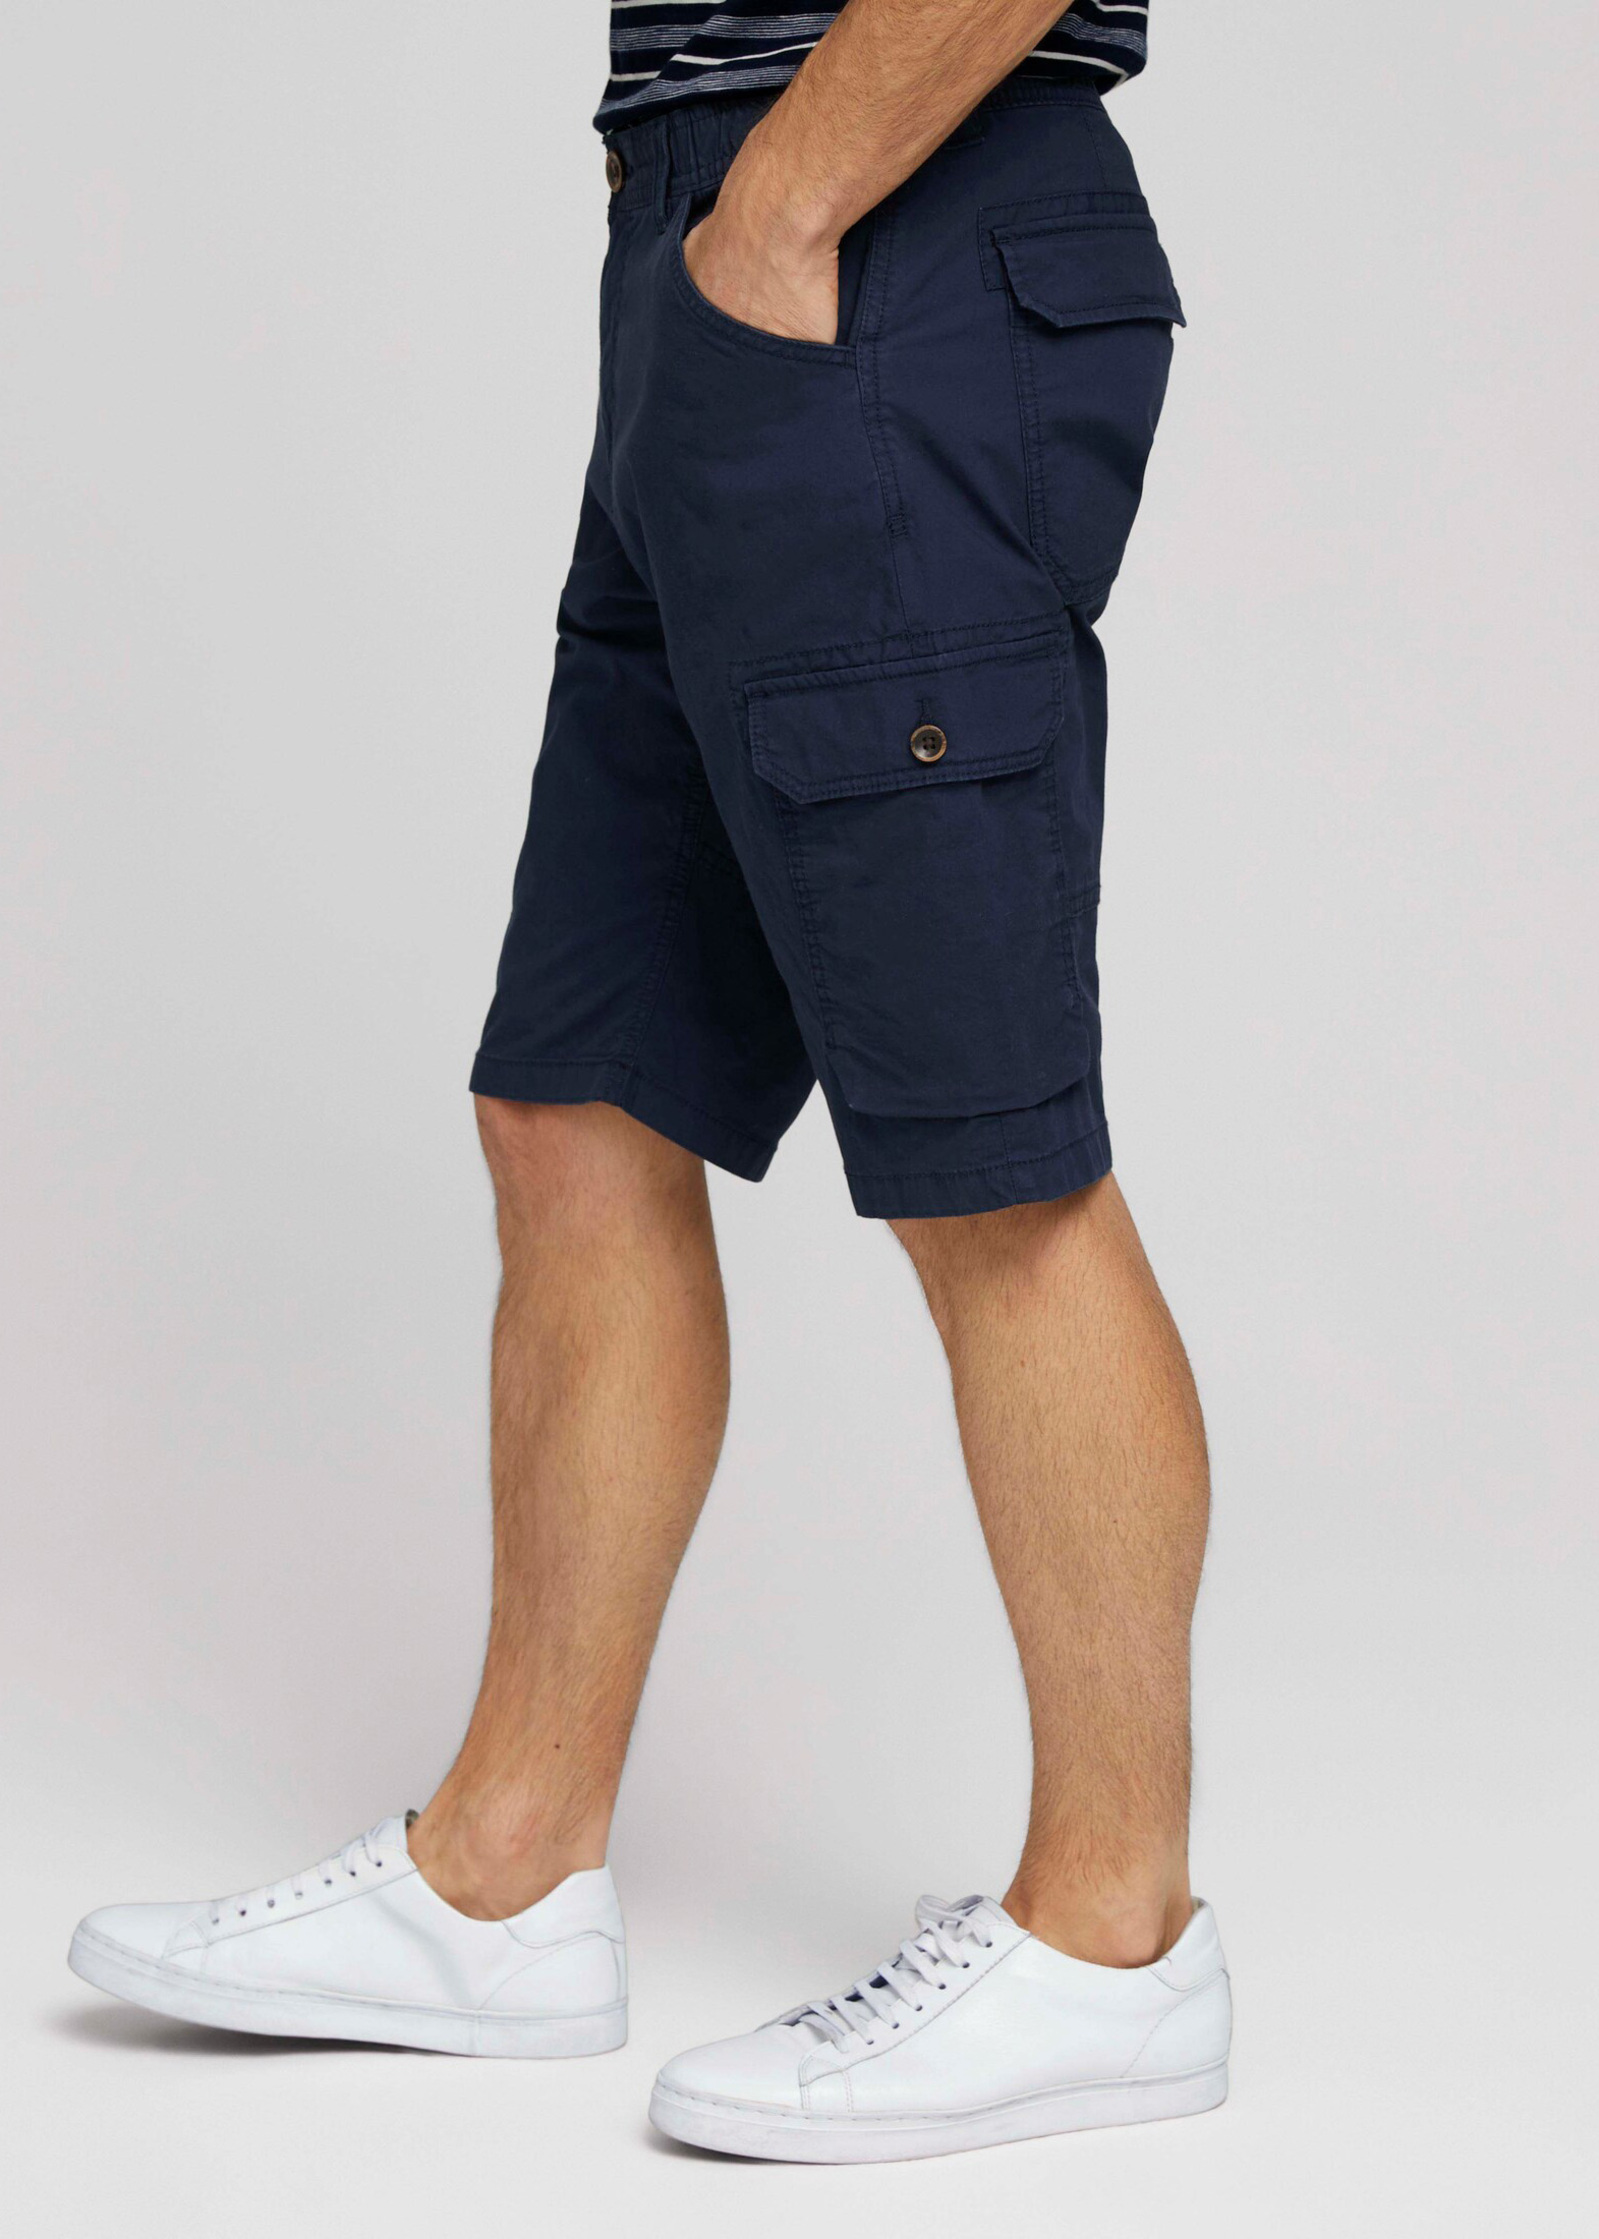 1026090-10932 Shorts Lightweight - Cargo Tailor Size Blue S Tom Sailor